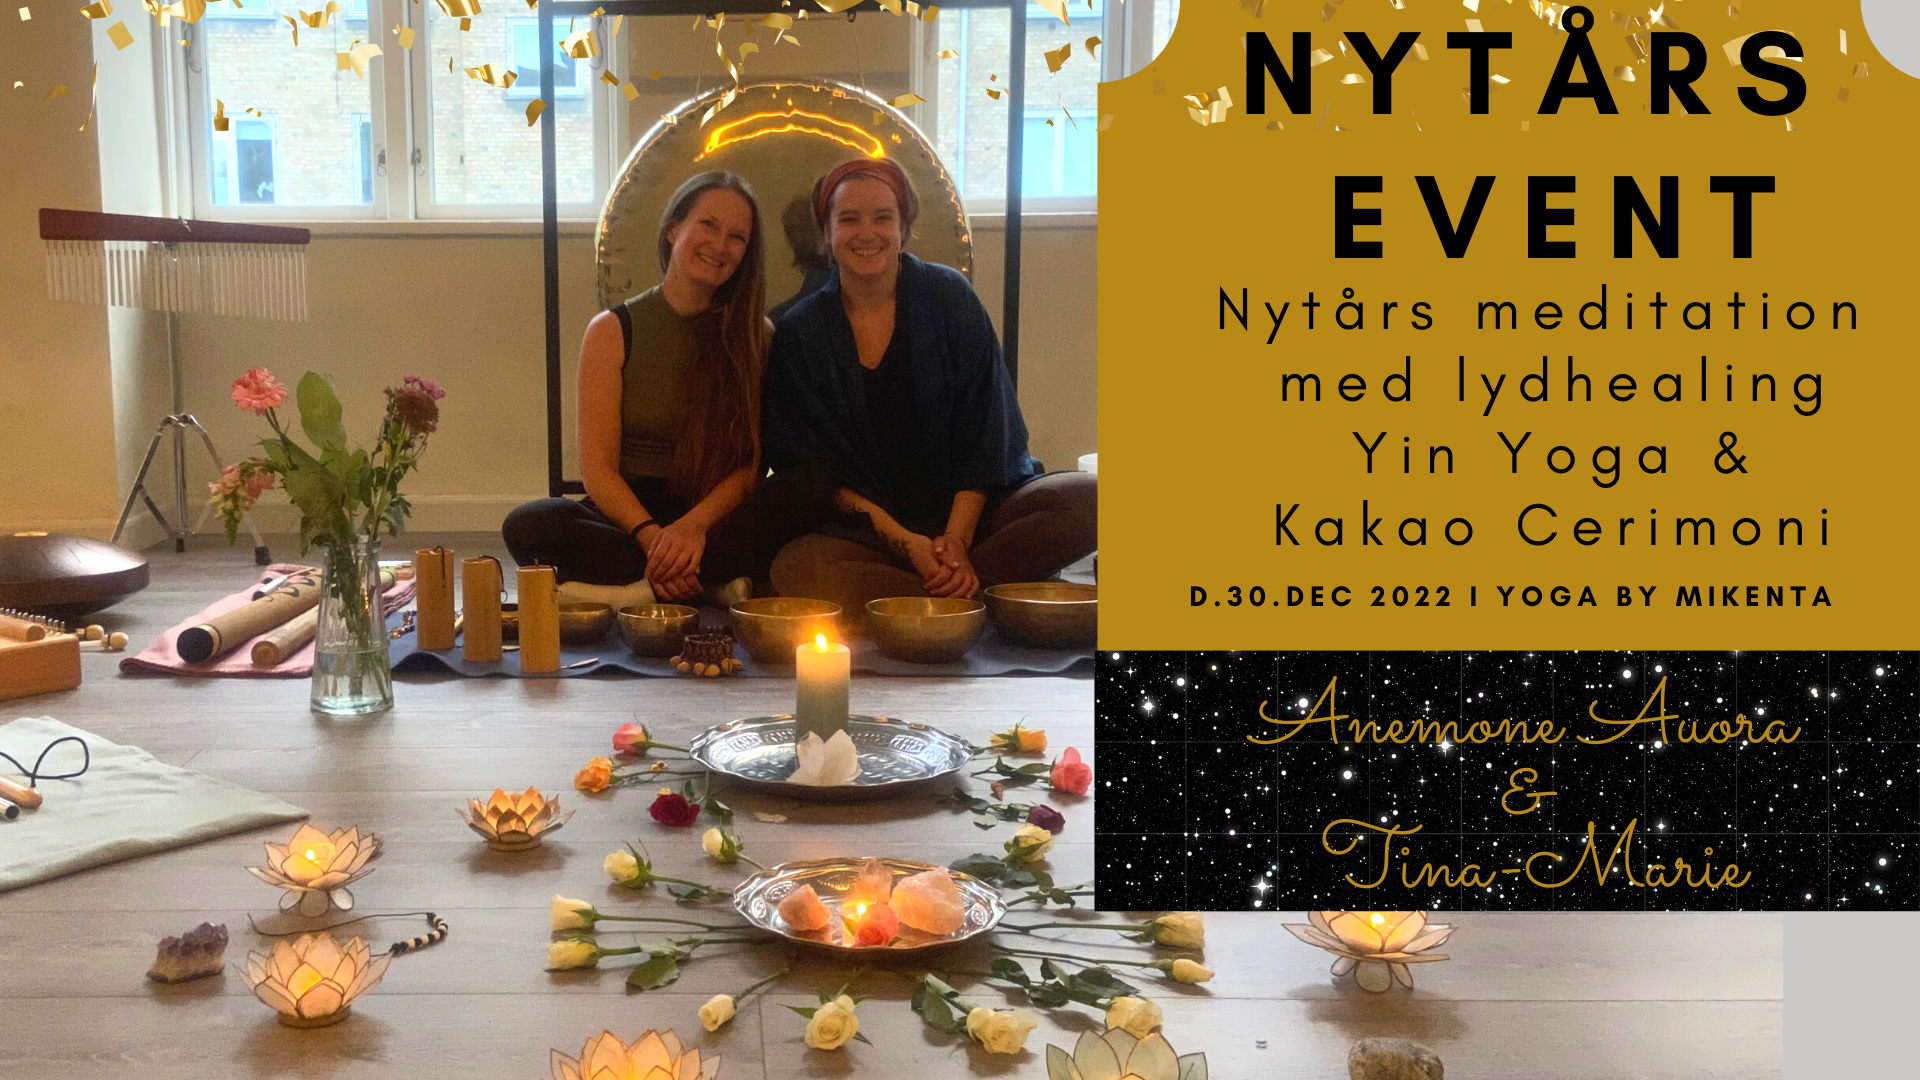 Nytårs Event – Nytås Meditation med lydhealing, kakao ceremoni & yoga